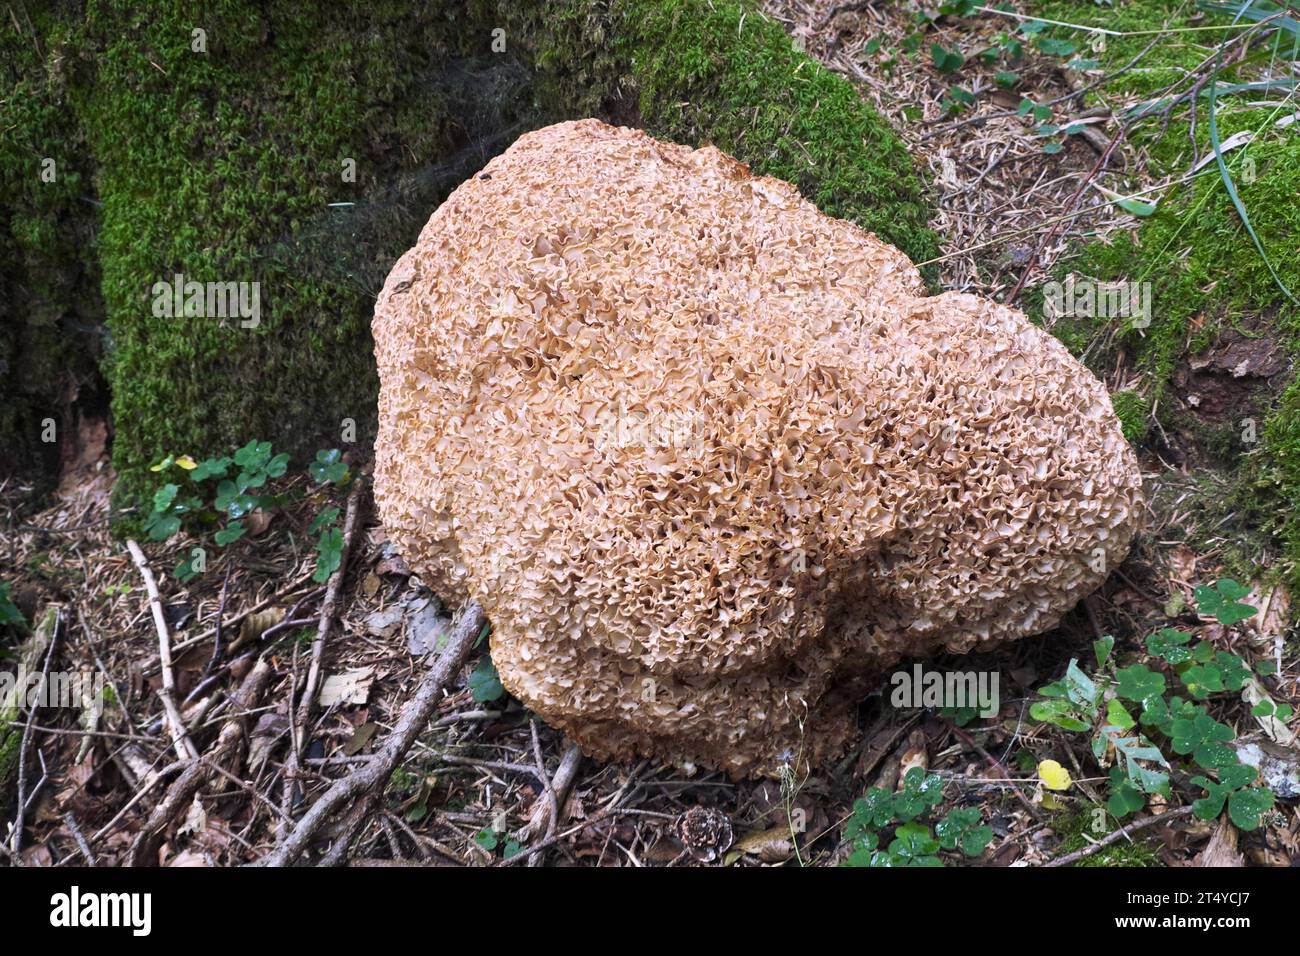 Cauliflower mushroom (Sparassis Crispa) in Perucica Primeval Rainforest in Sutjeska National Park, Bosnia and Herzegovina Stock Photo